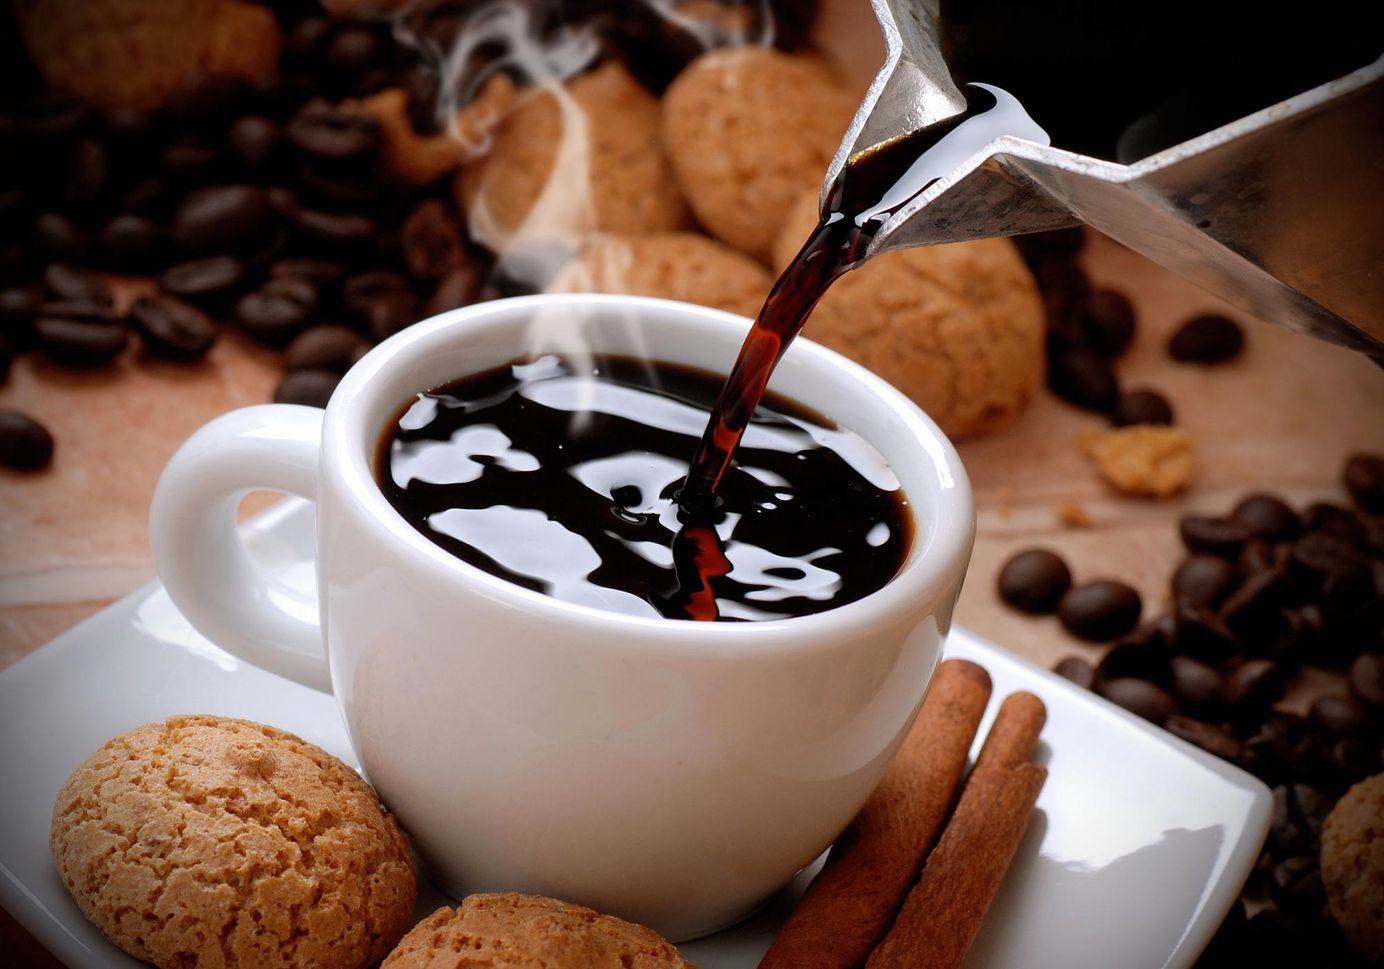 Pouring Cup Of Coffee مجلة نقطة العلمية